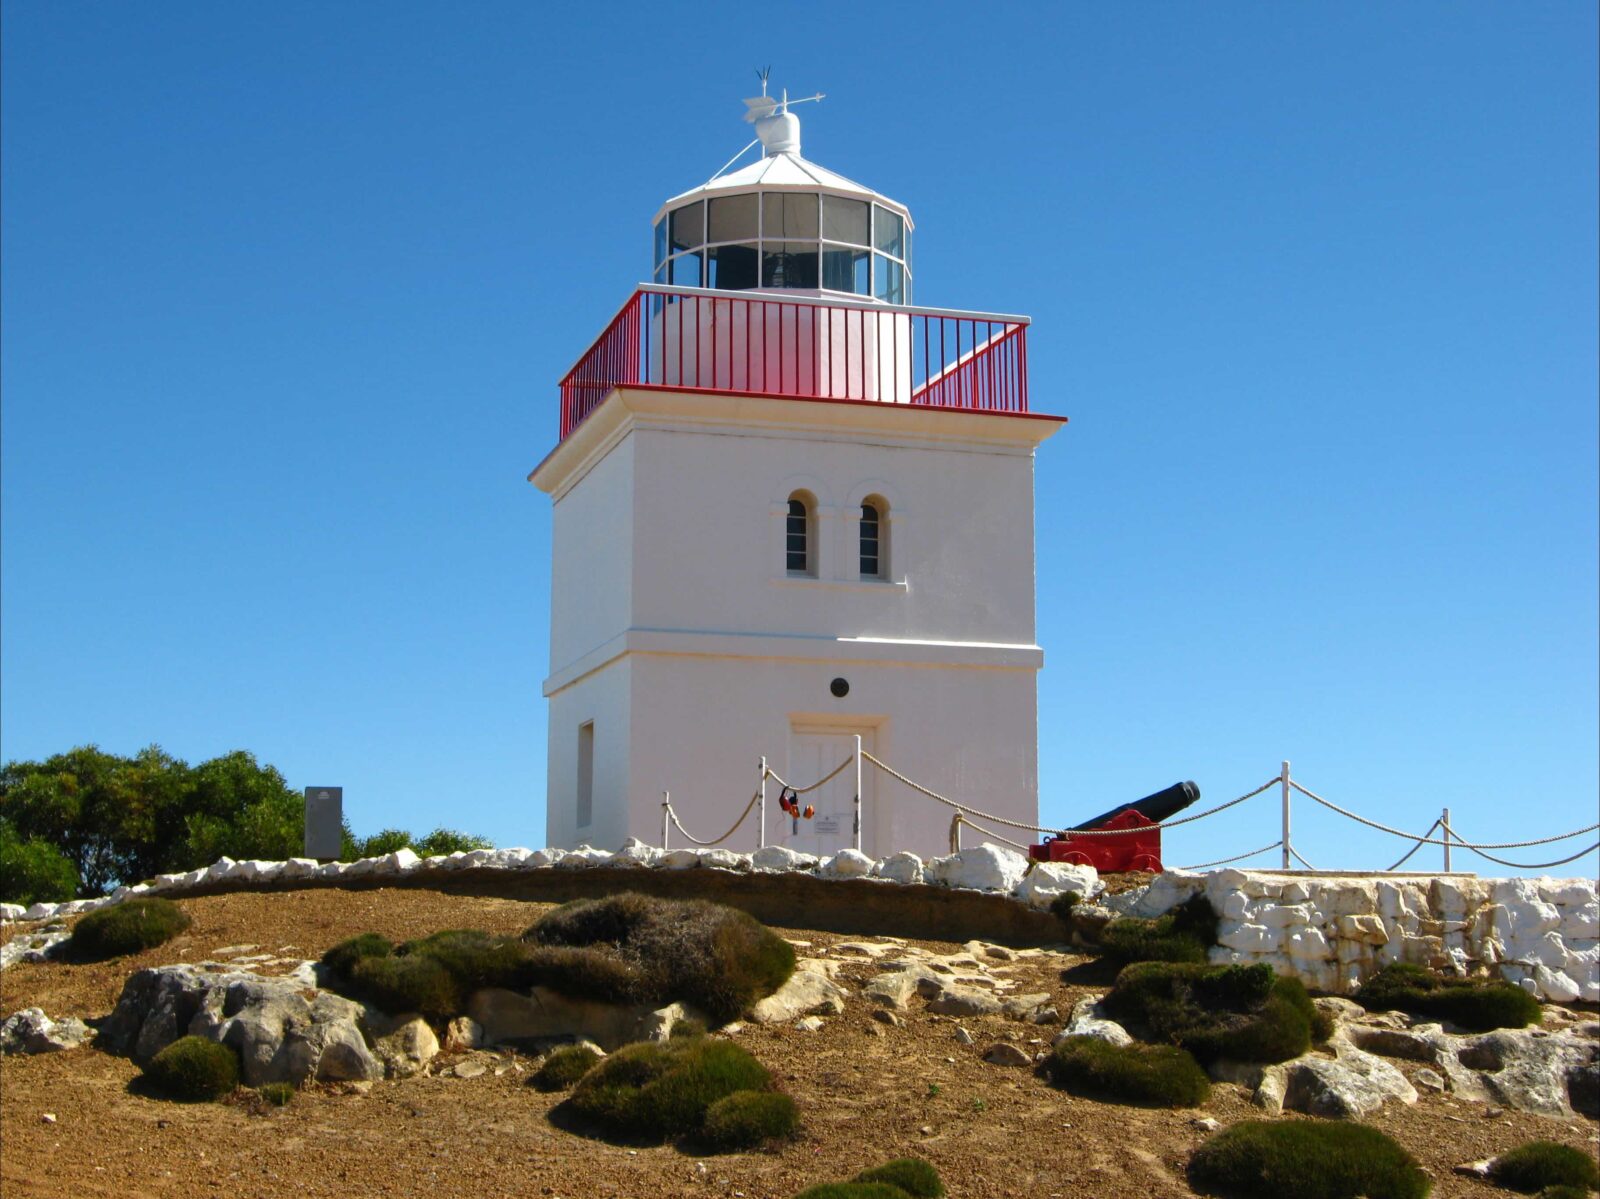 Cape Borda lighthouse and cannon